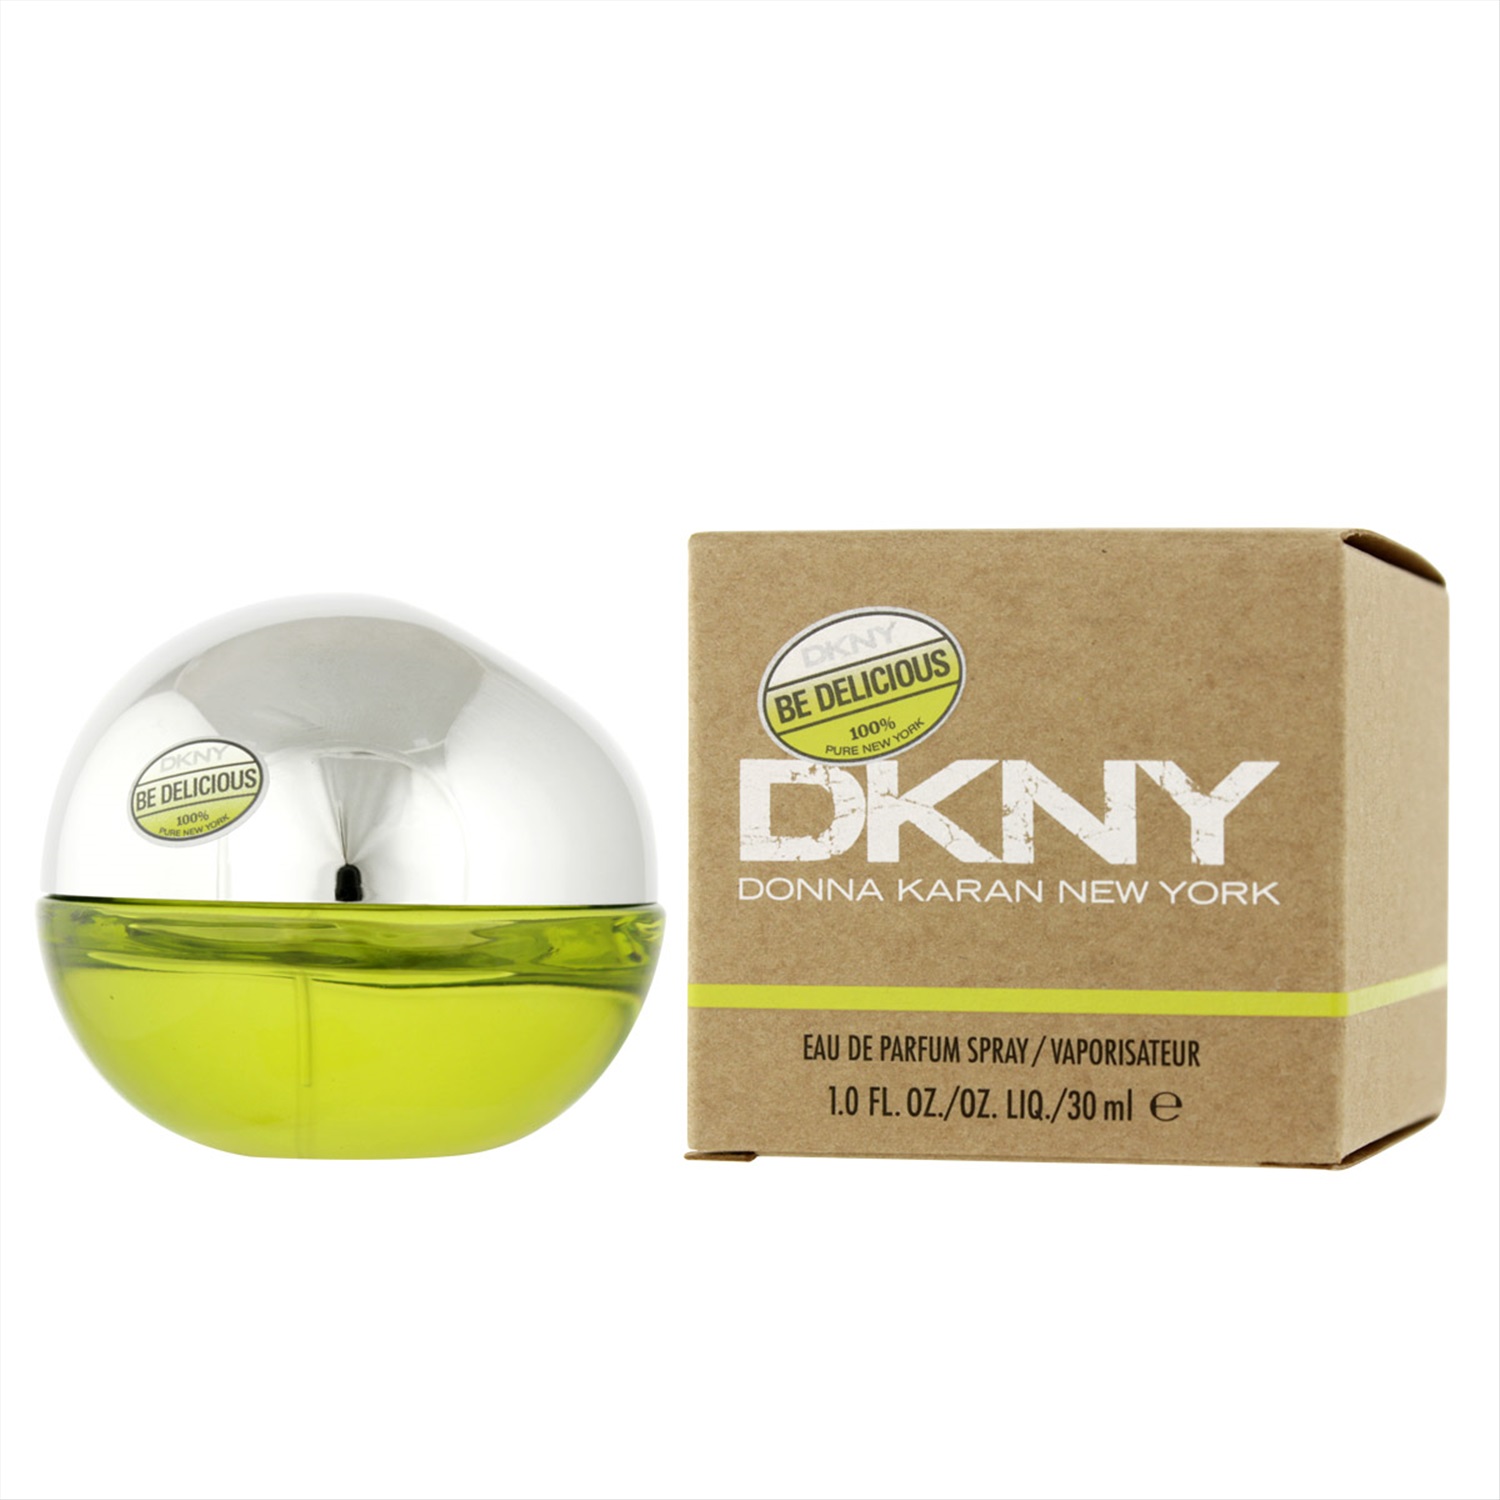 Donna karan dkny be delicious. Donna Karan be delicious Lady 30ml EDP. DKNY Donna Karan New York 30 мл. DKNY be delicious Eau de Parfum Spray vaporisateur 100 ml.